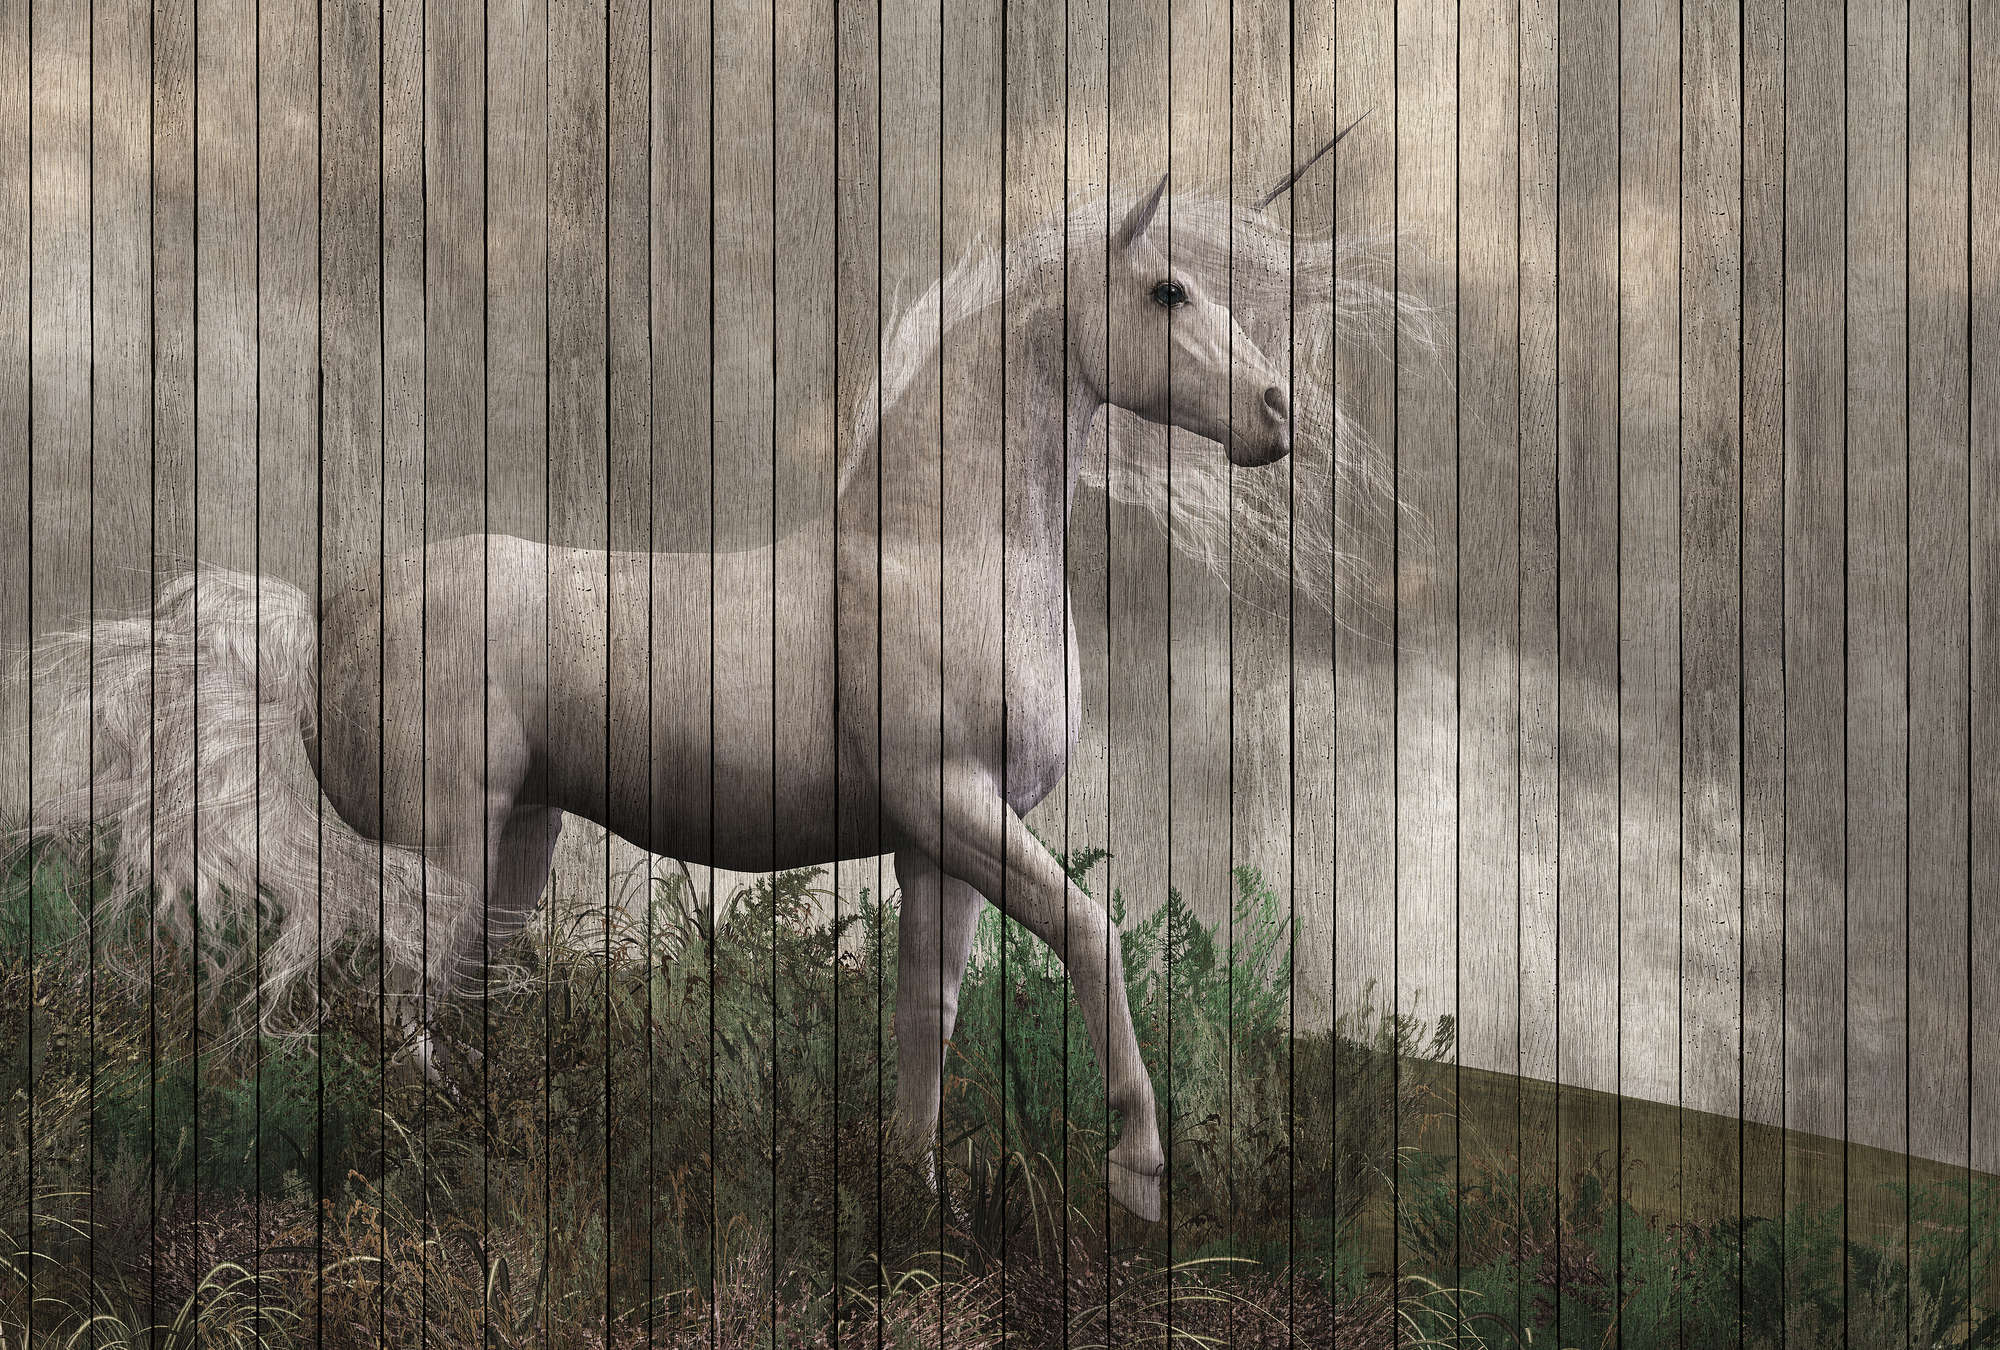             Fantasy 3 - Unicorn Wallpaper with Wooden Board Optics - Beige, Brown | Textured Non-woven
        